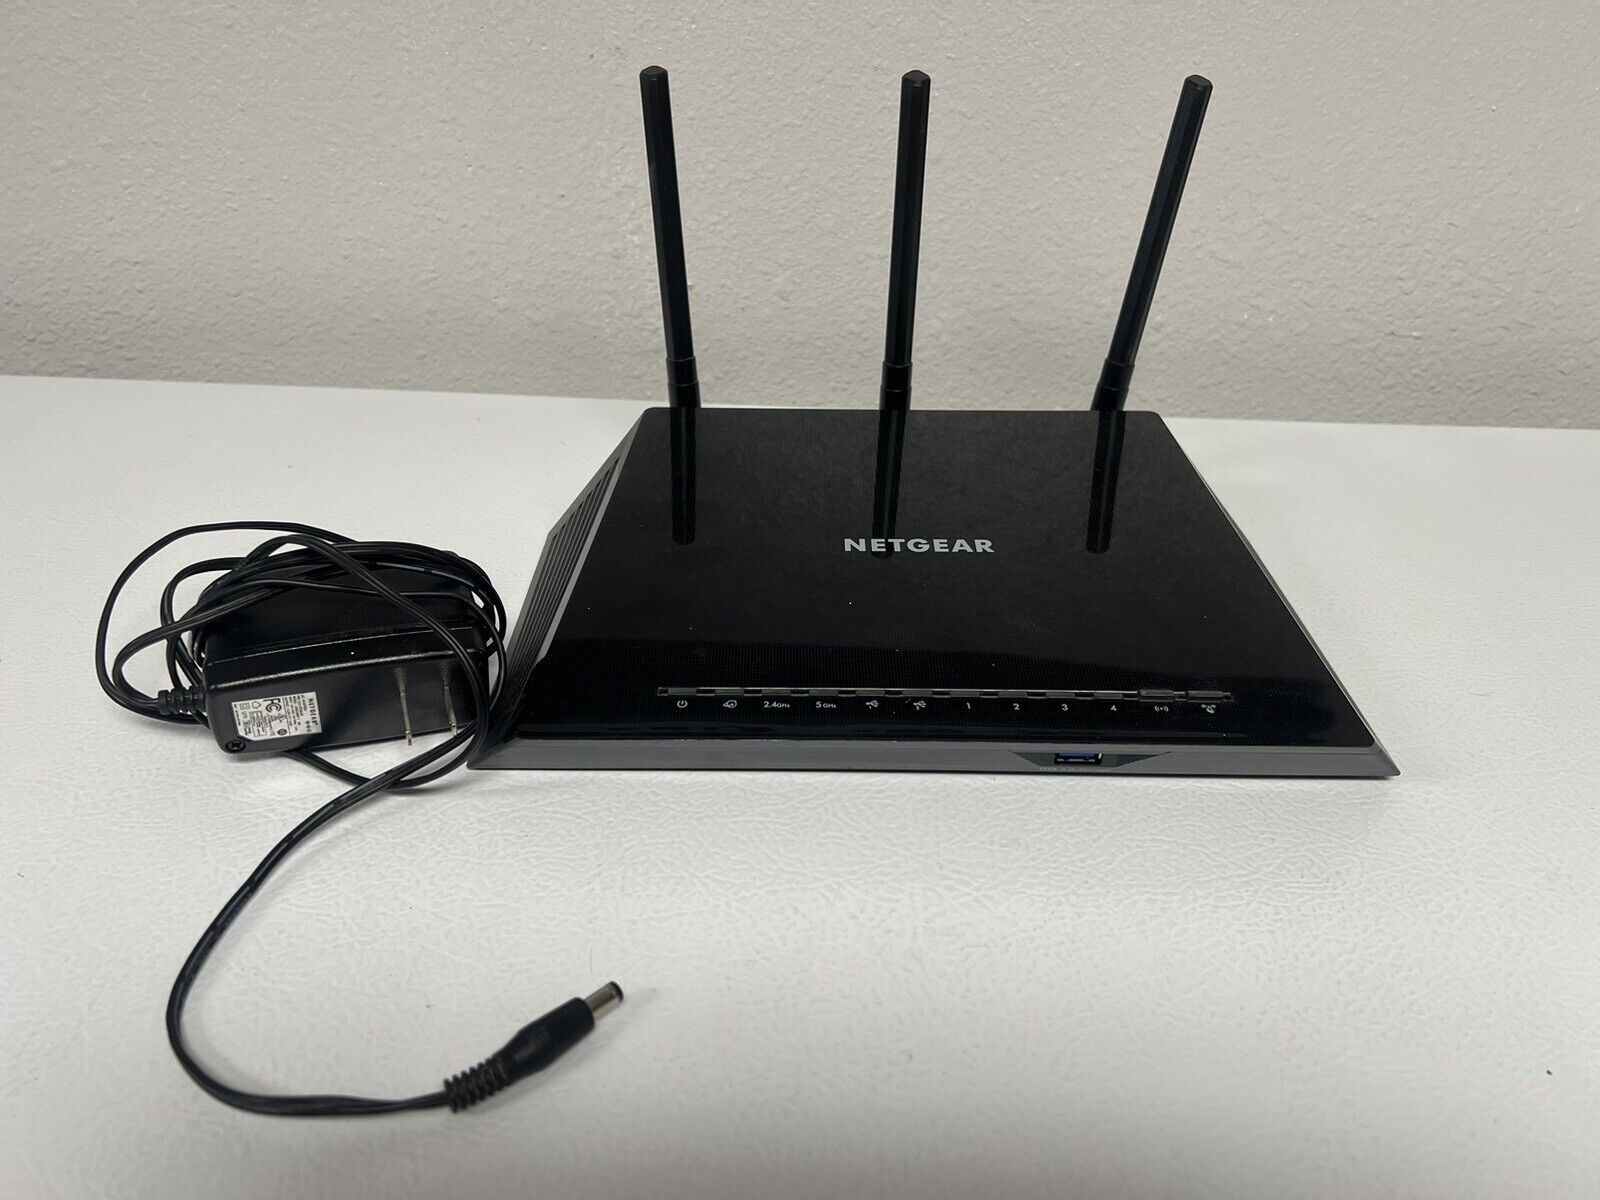 Netgear Smart WiFi Router R6400 Wireless Dual Band Gigabit Internet AC1750